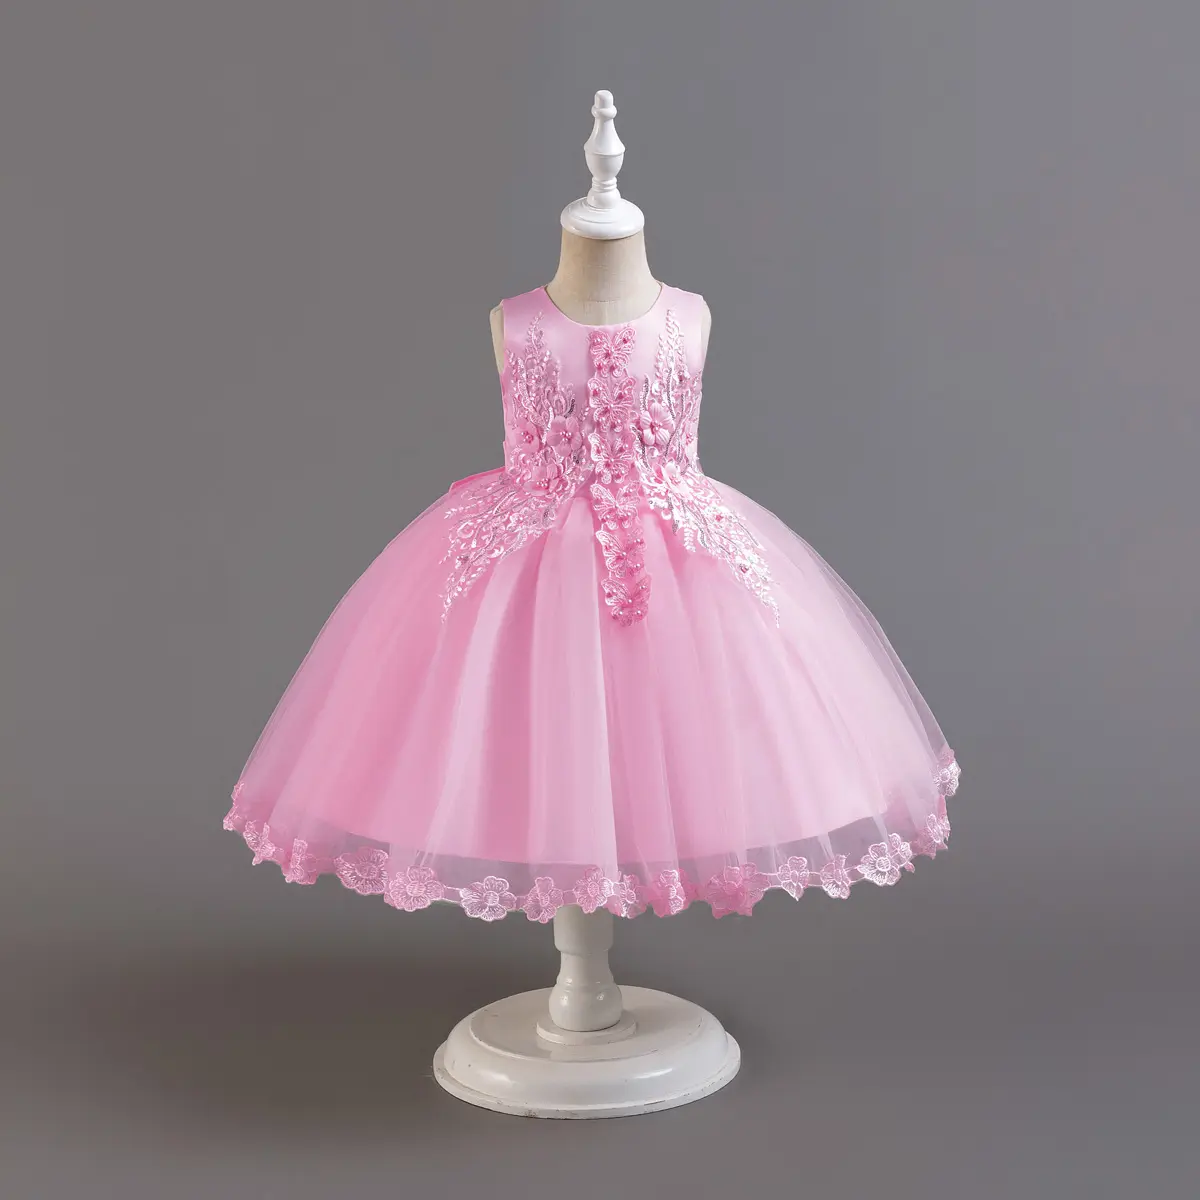 Pakaian bayi 2835 pabrik butik pakaian perempuan Model baru 0 3 bulan gaun anak perempuan bunga